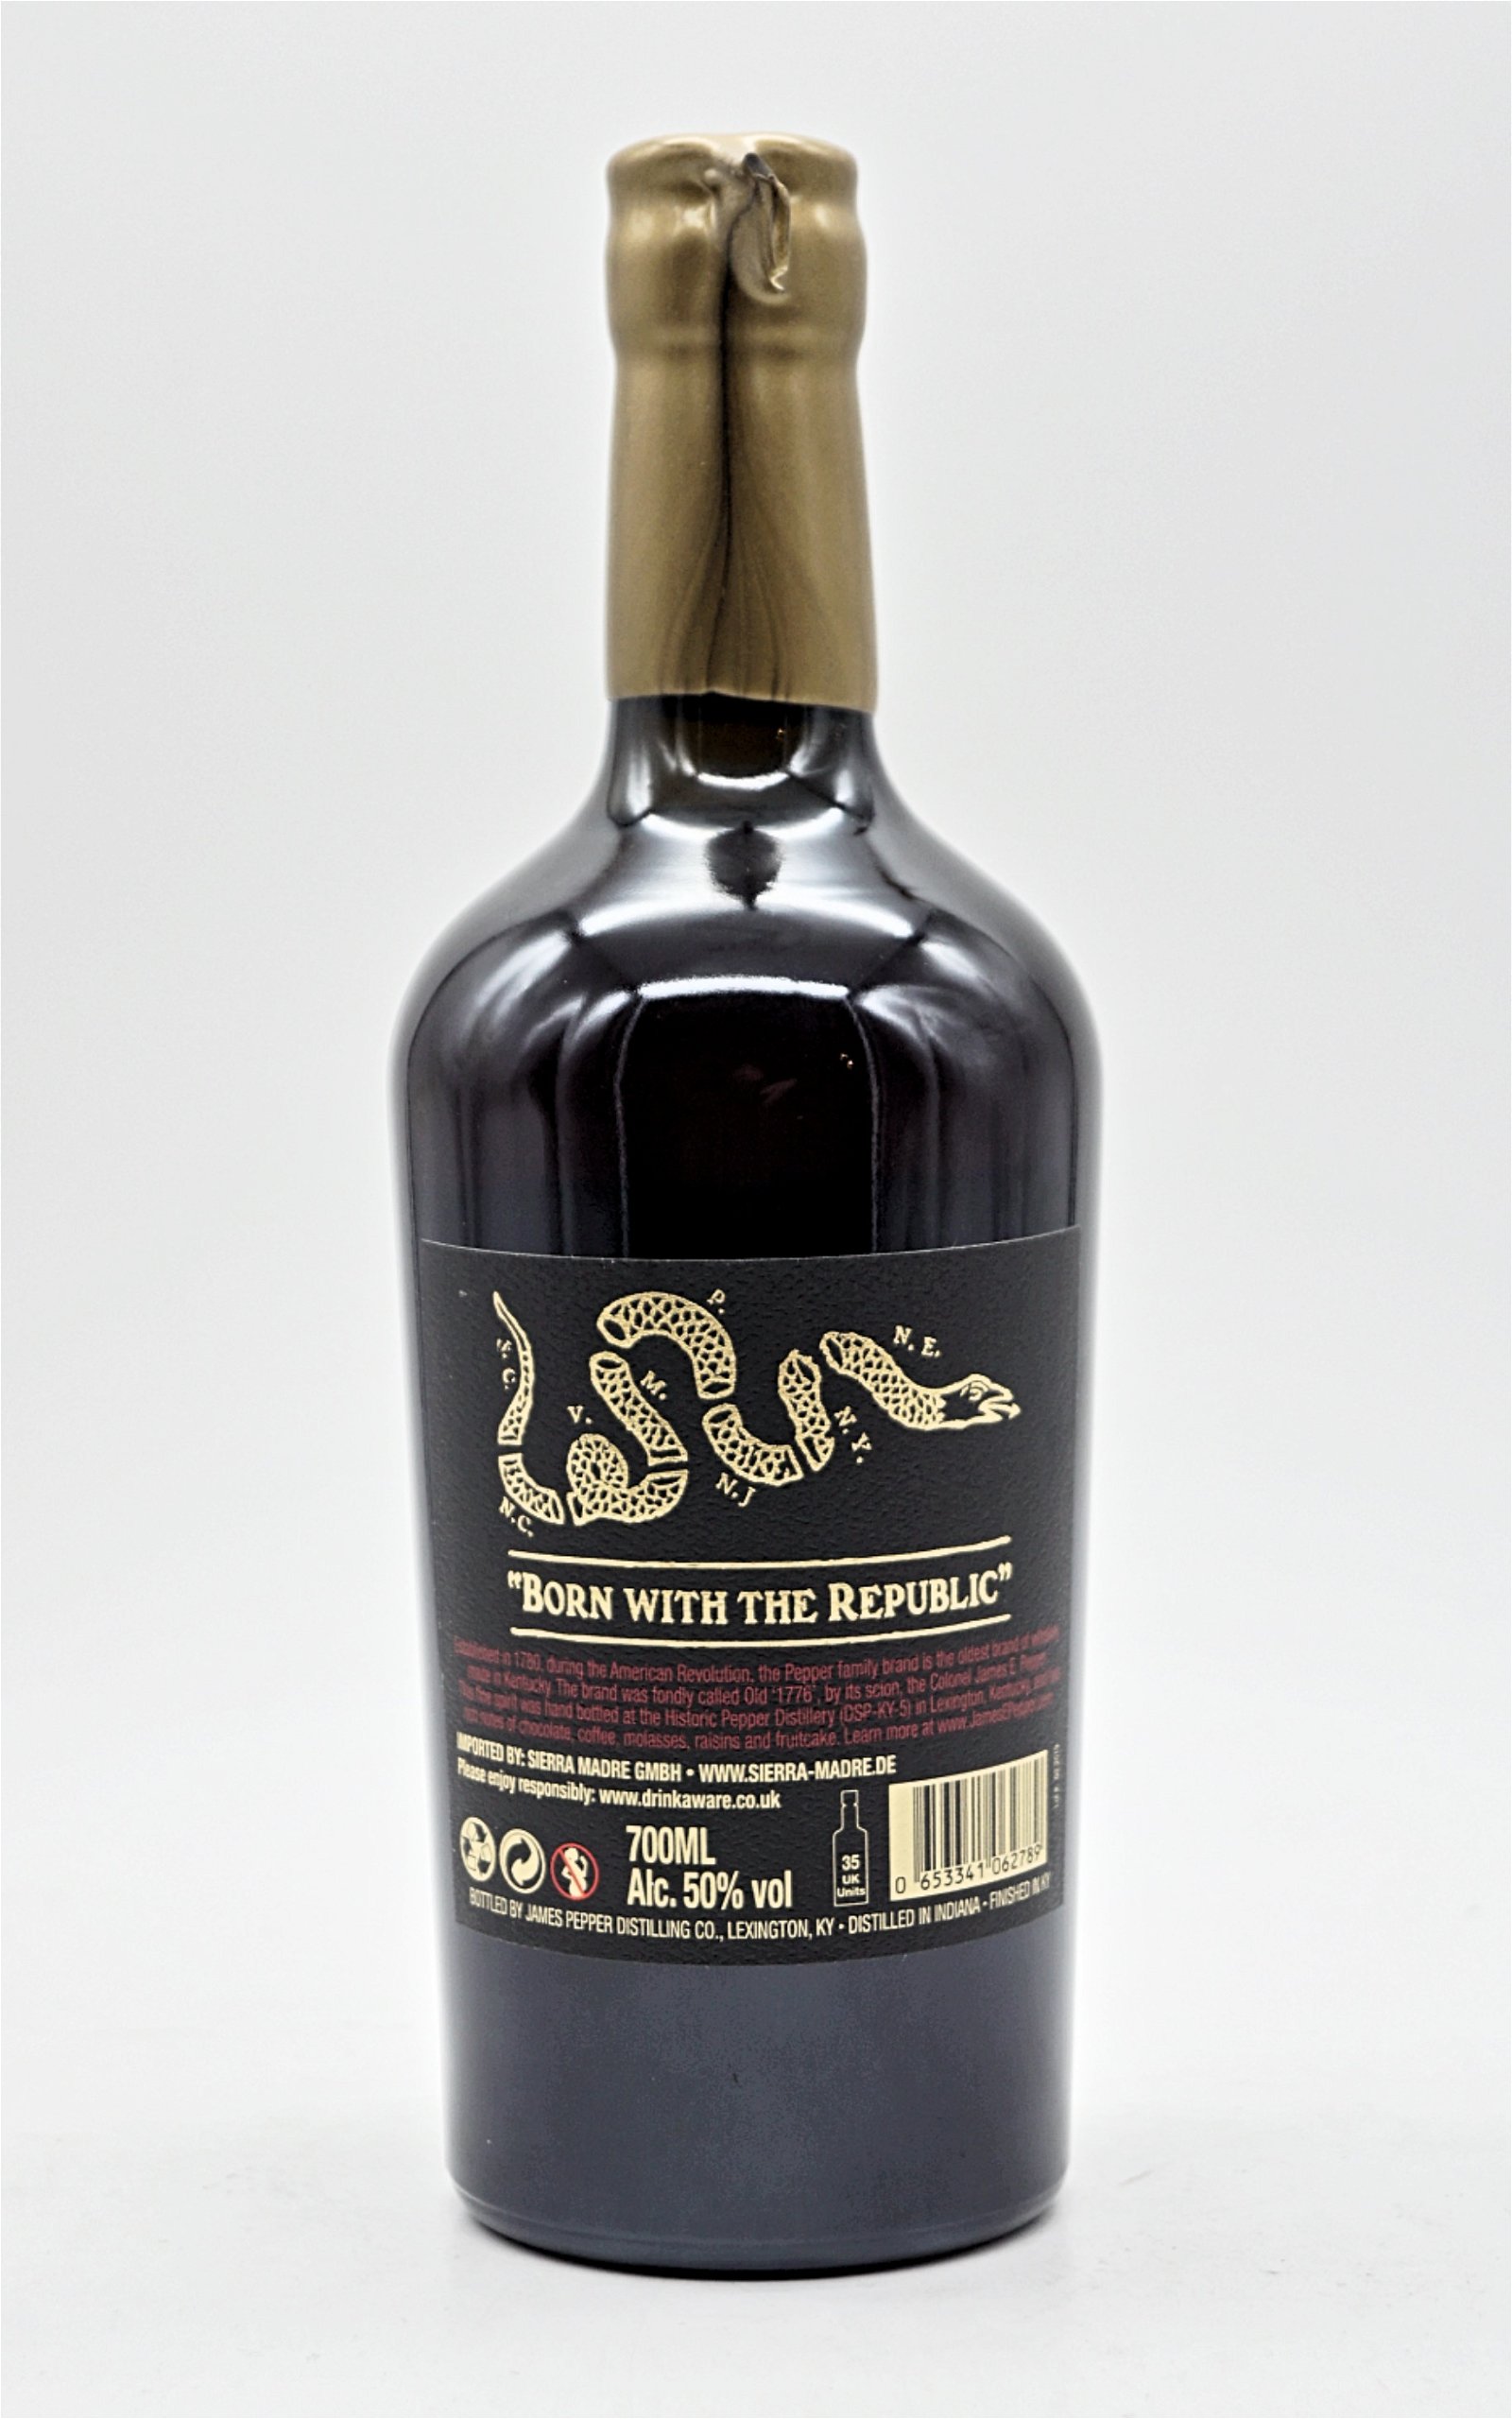 James E. Pepper 1776 Straight Rye Whiskey PX Sherry Finish 100 Proof